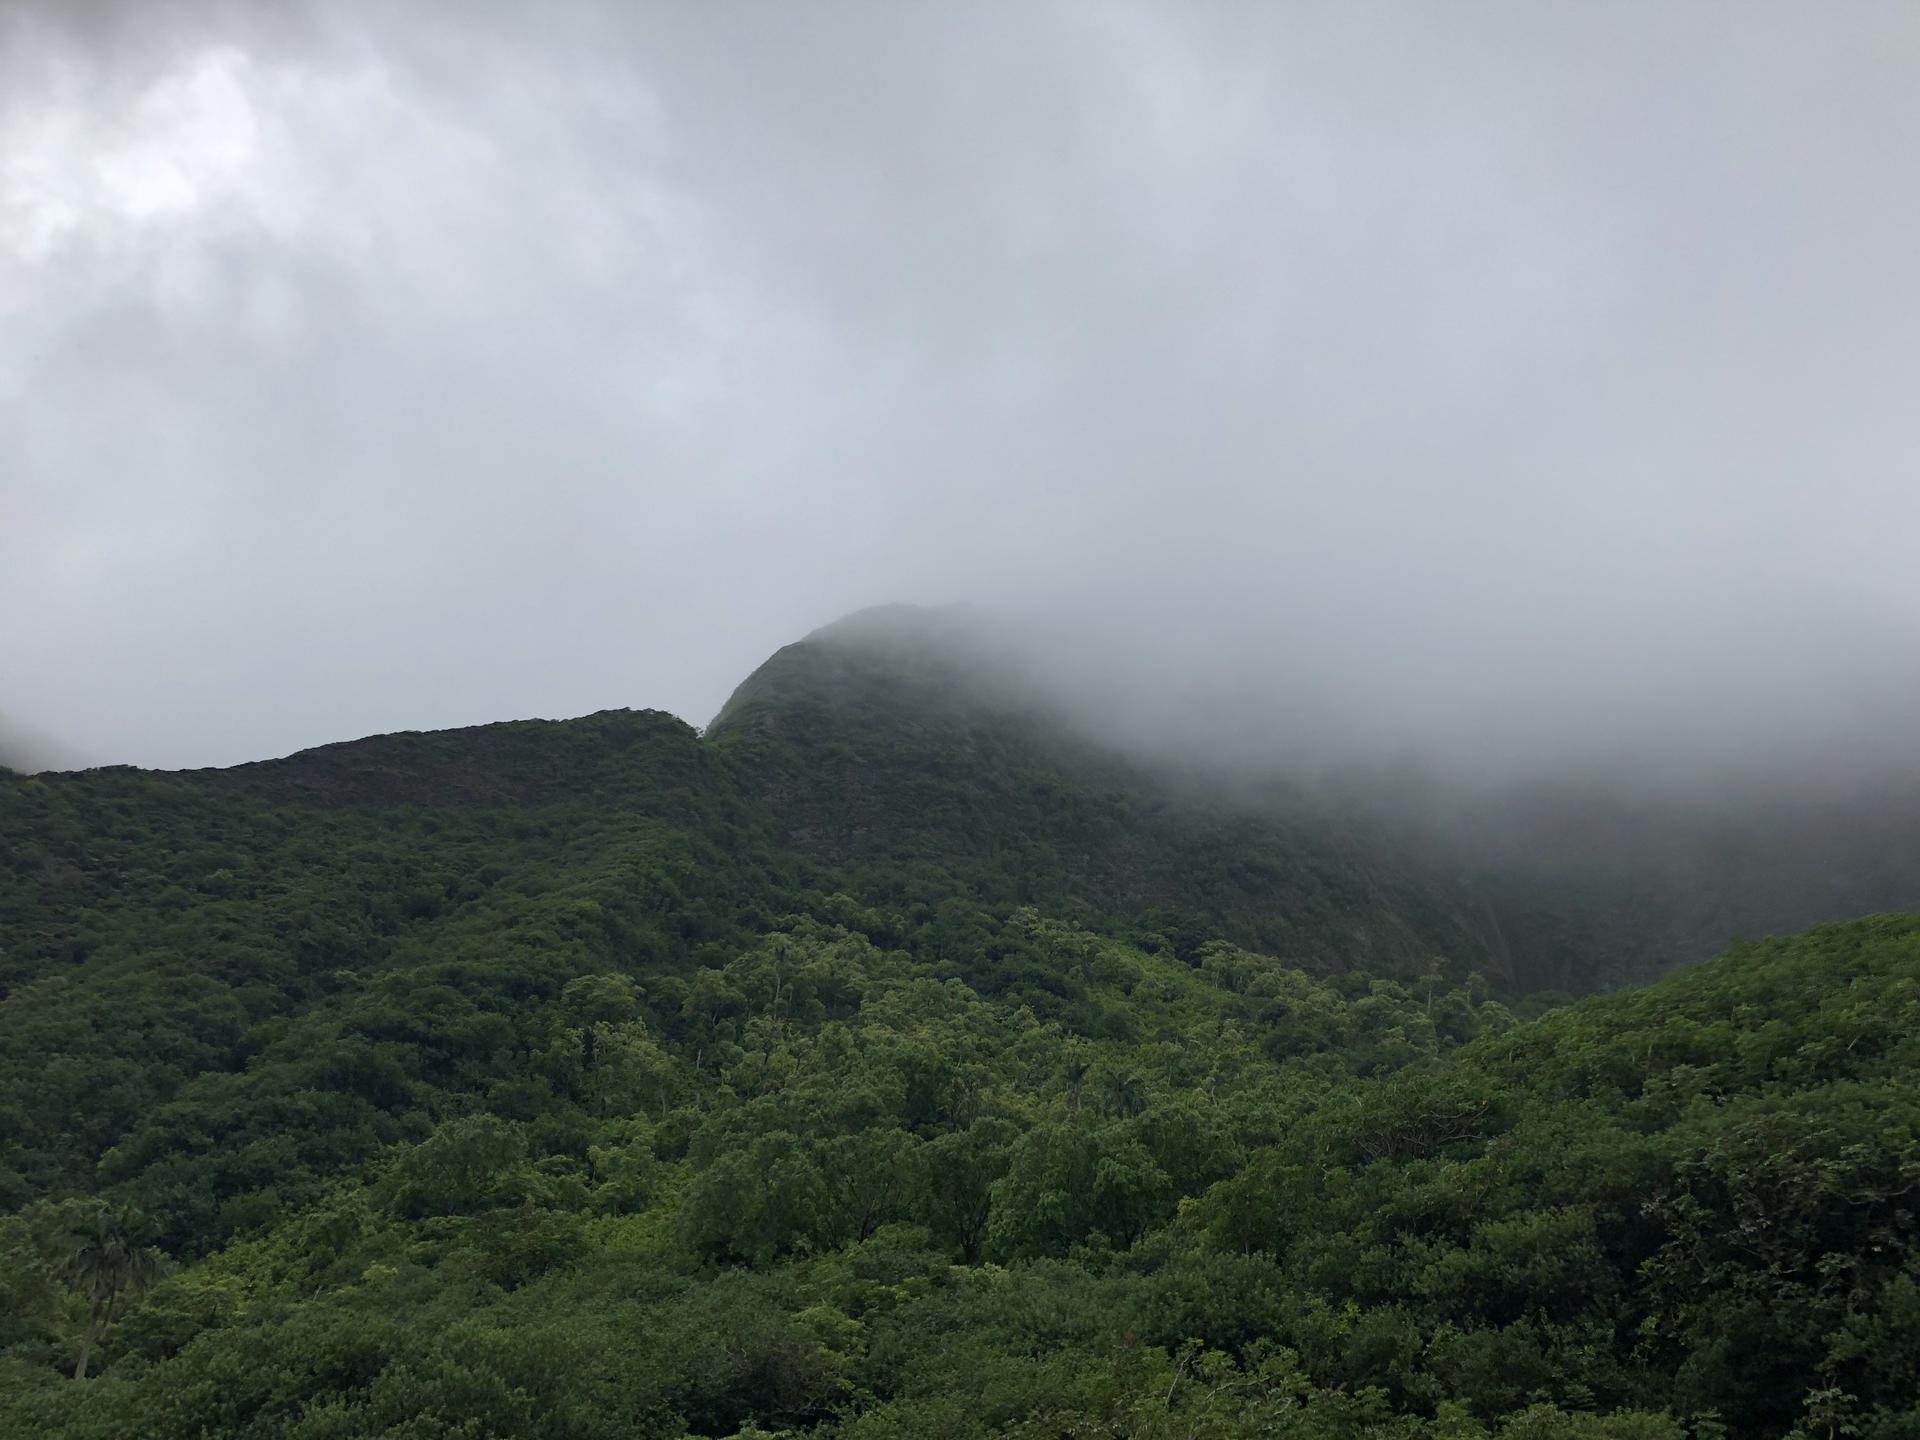 Mountain range in Maui, HI